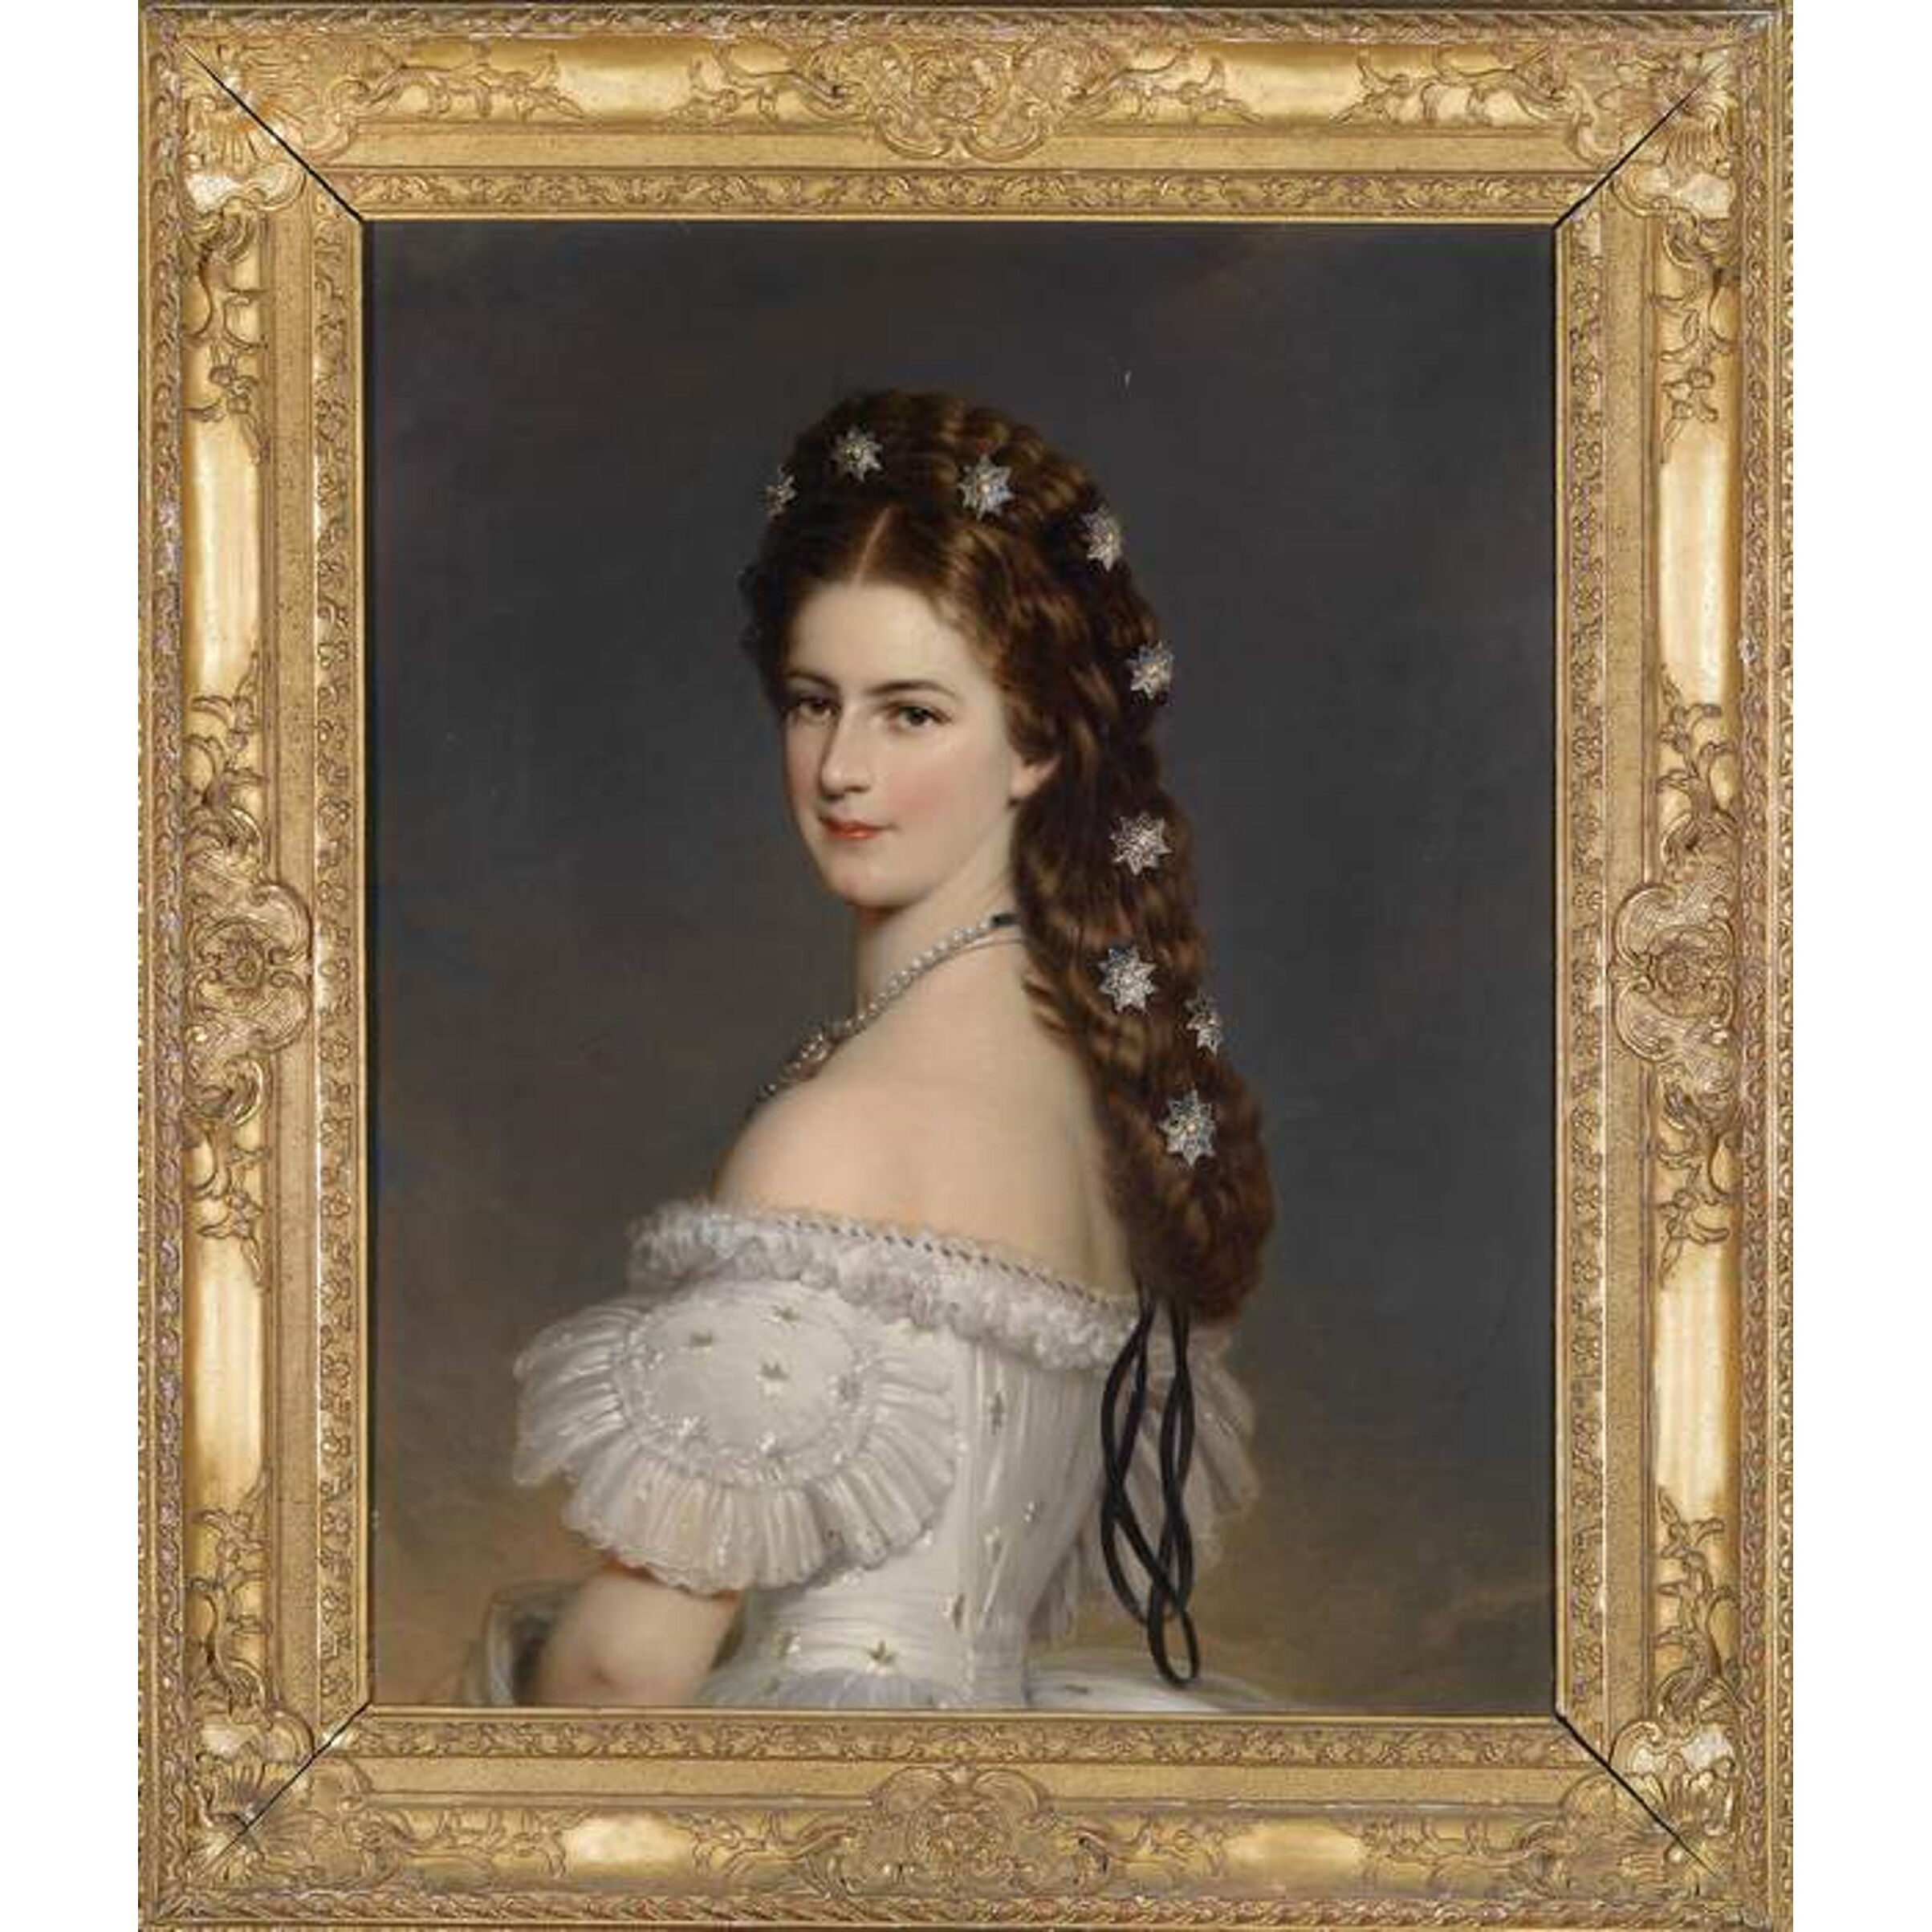 Portrait of Empress Elisabeth of Austria